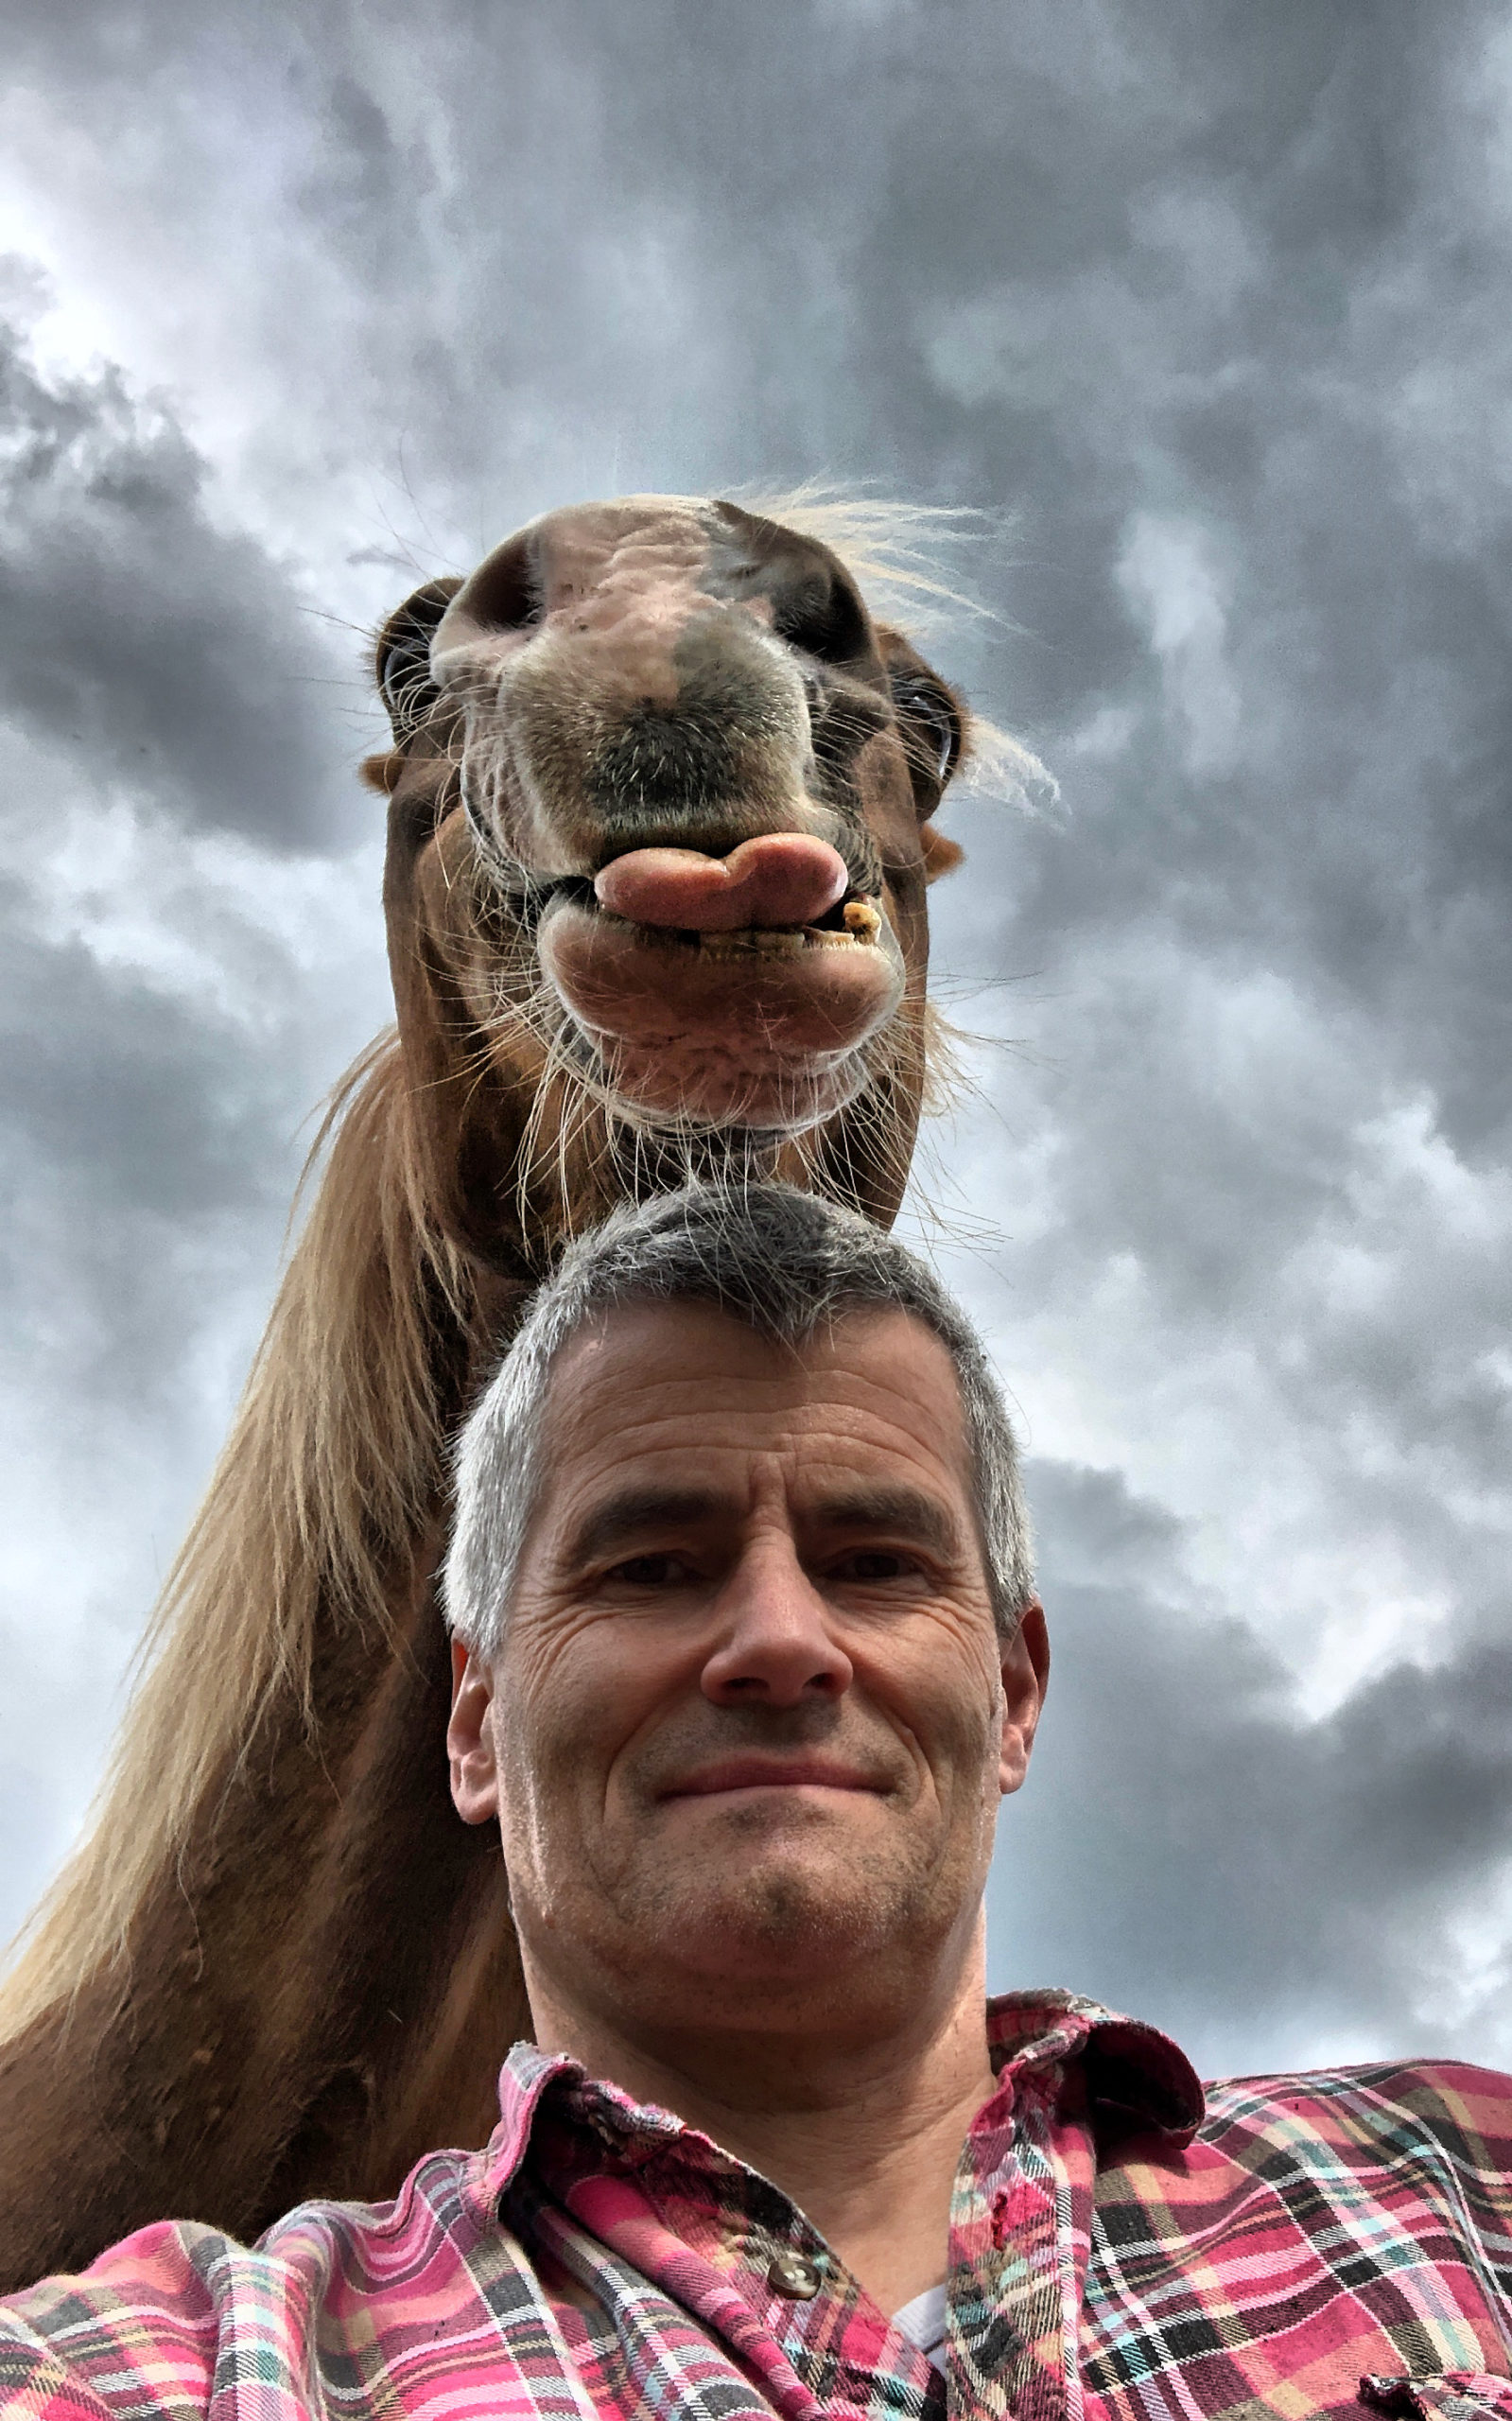 Fotografija 'Funny horse' fotografa Petera von Shnena snimljena u Njemačkoj. 